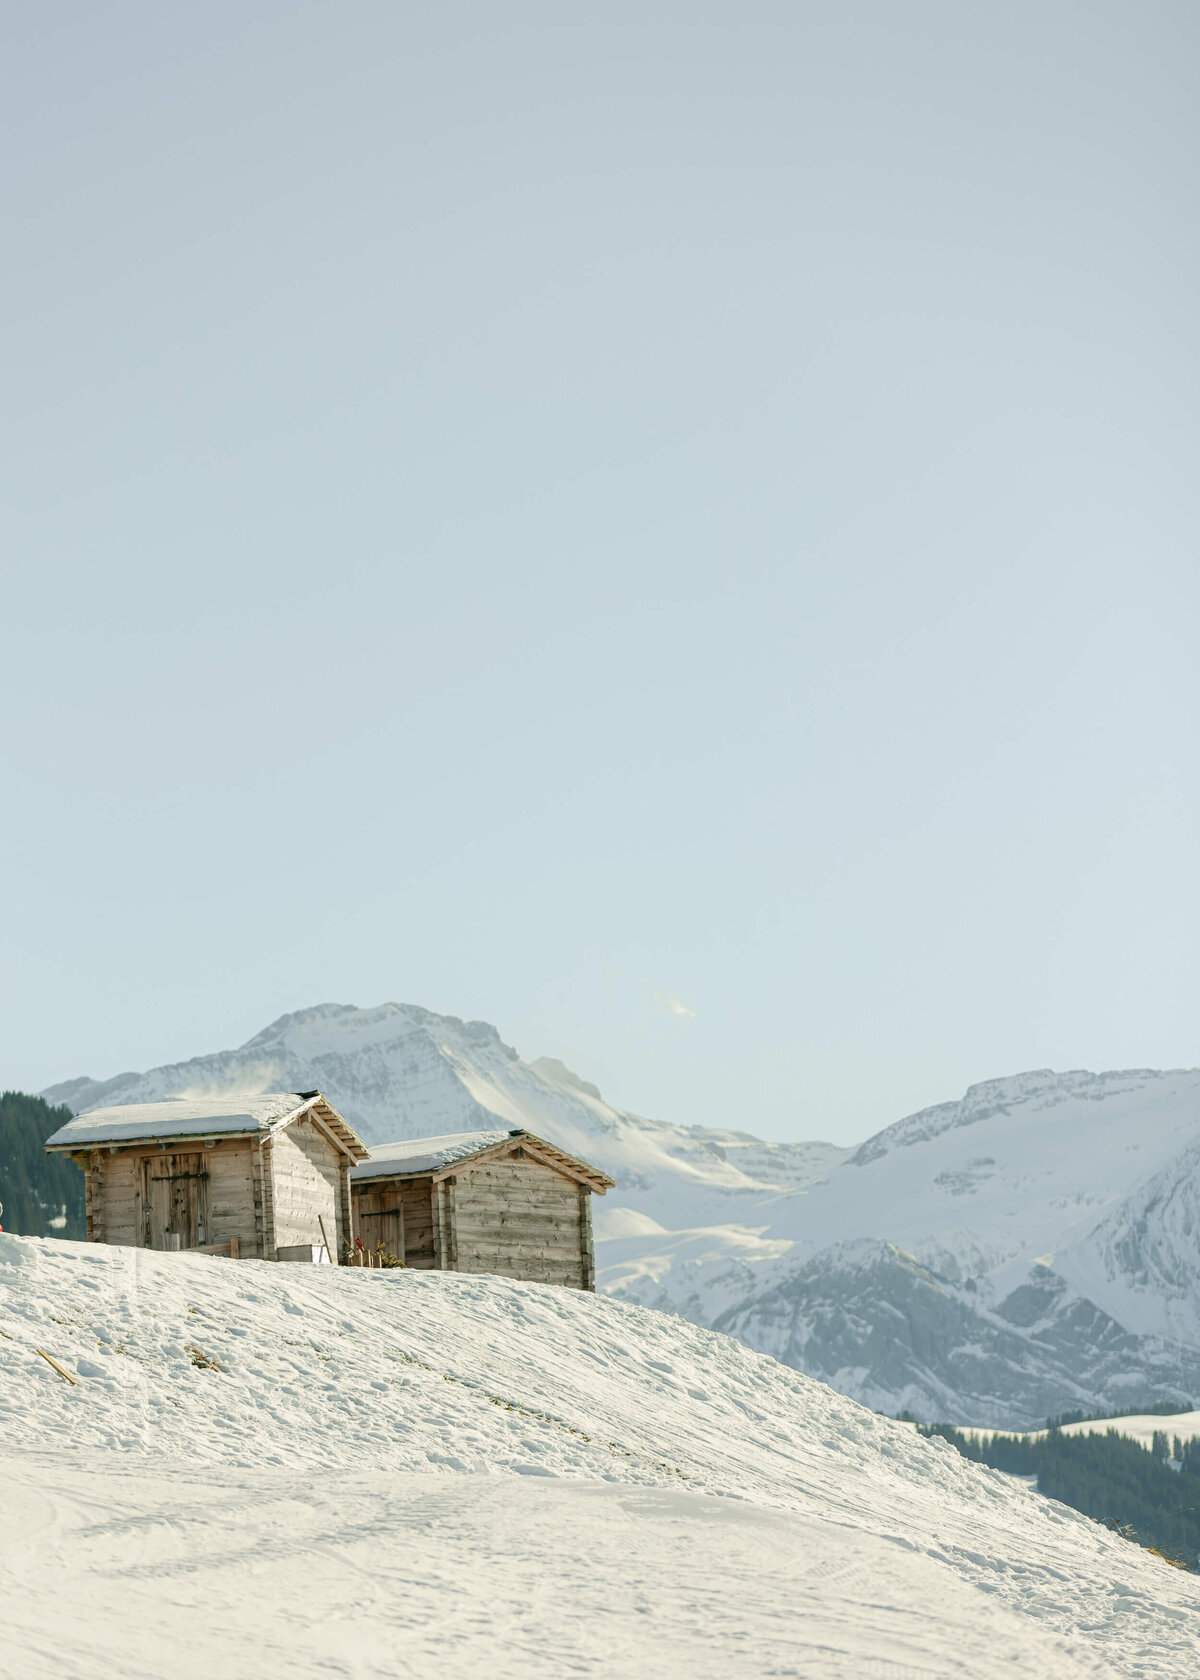 chloe-winstanley-events-switzerland-gstaad-ski-slopes-hut